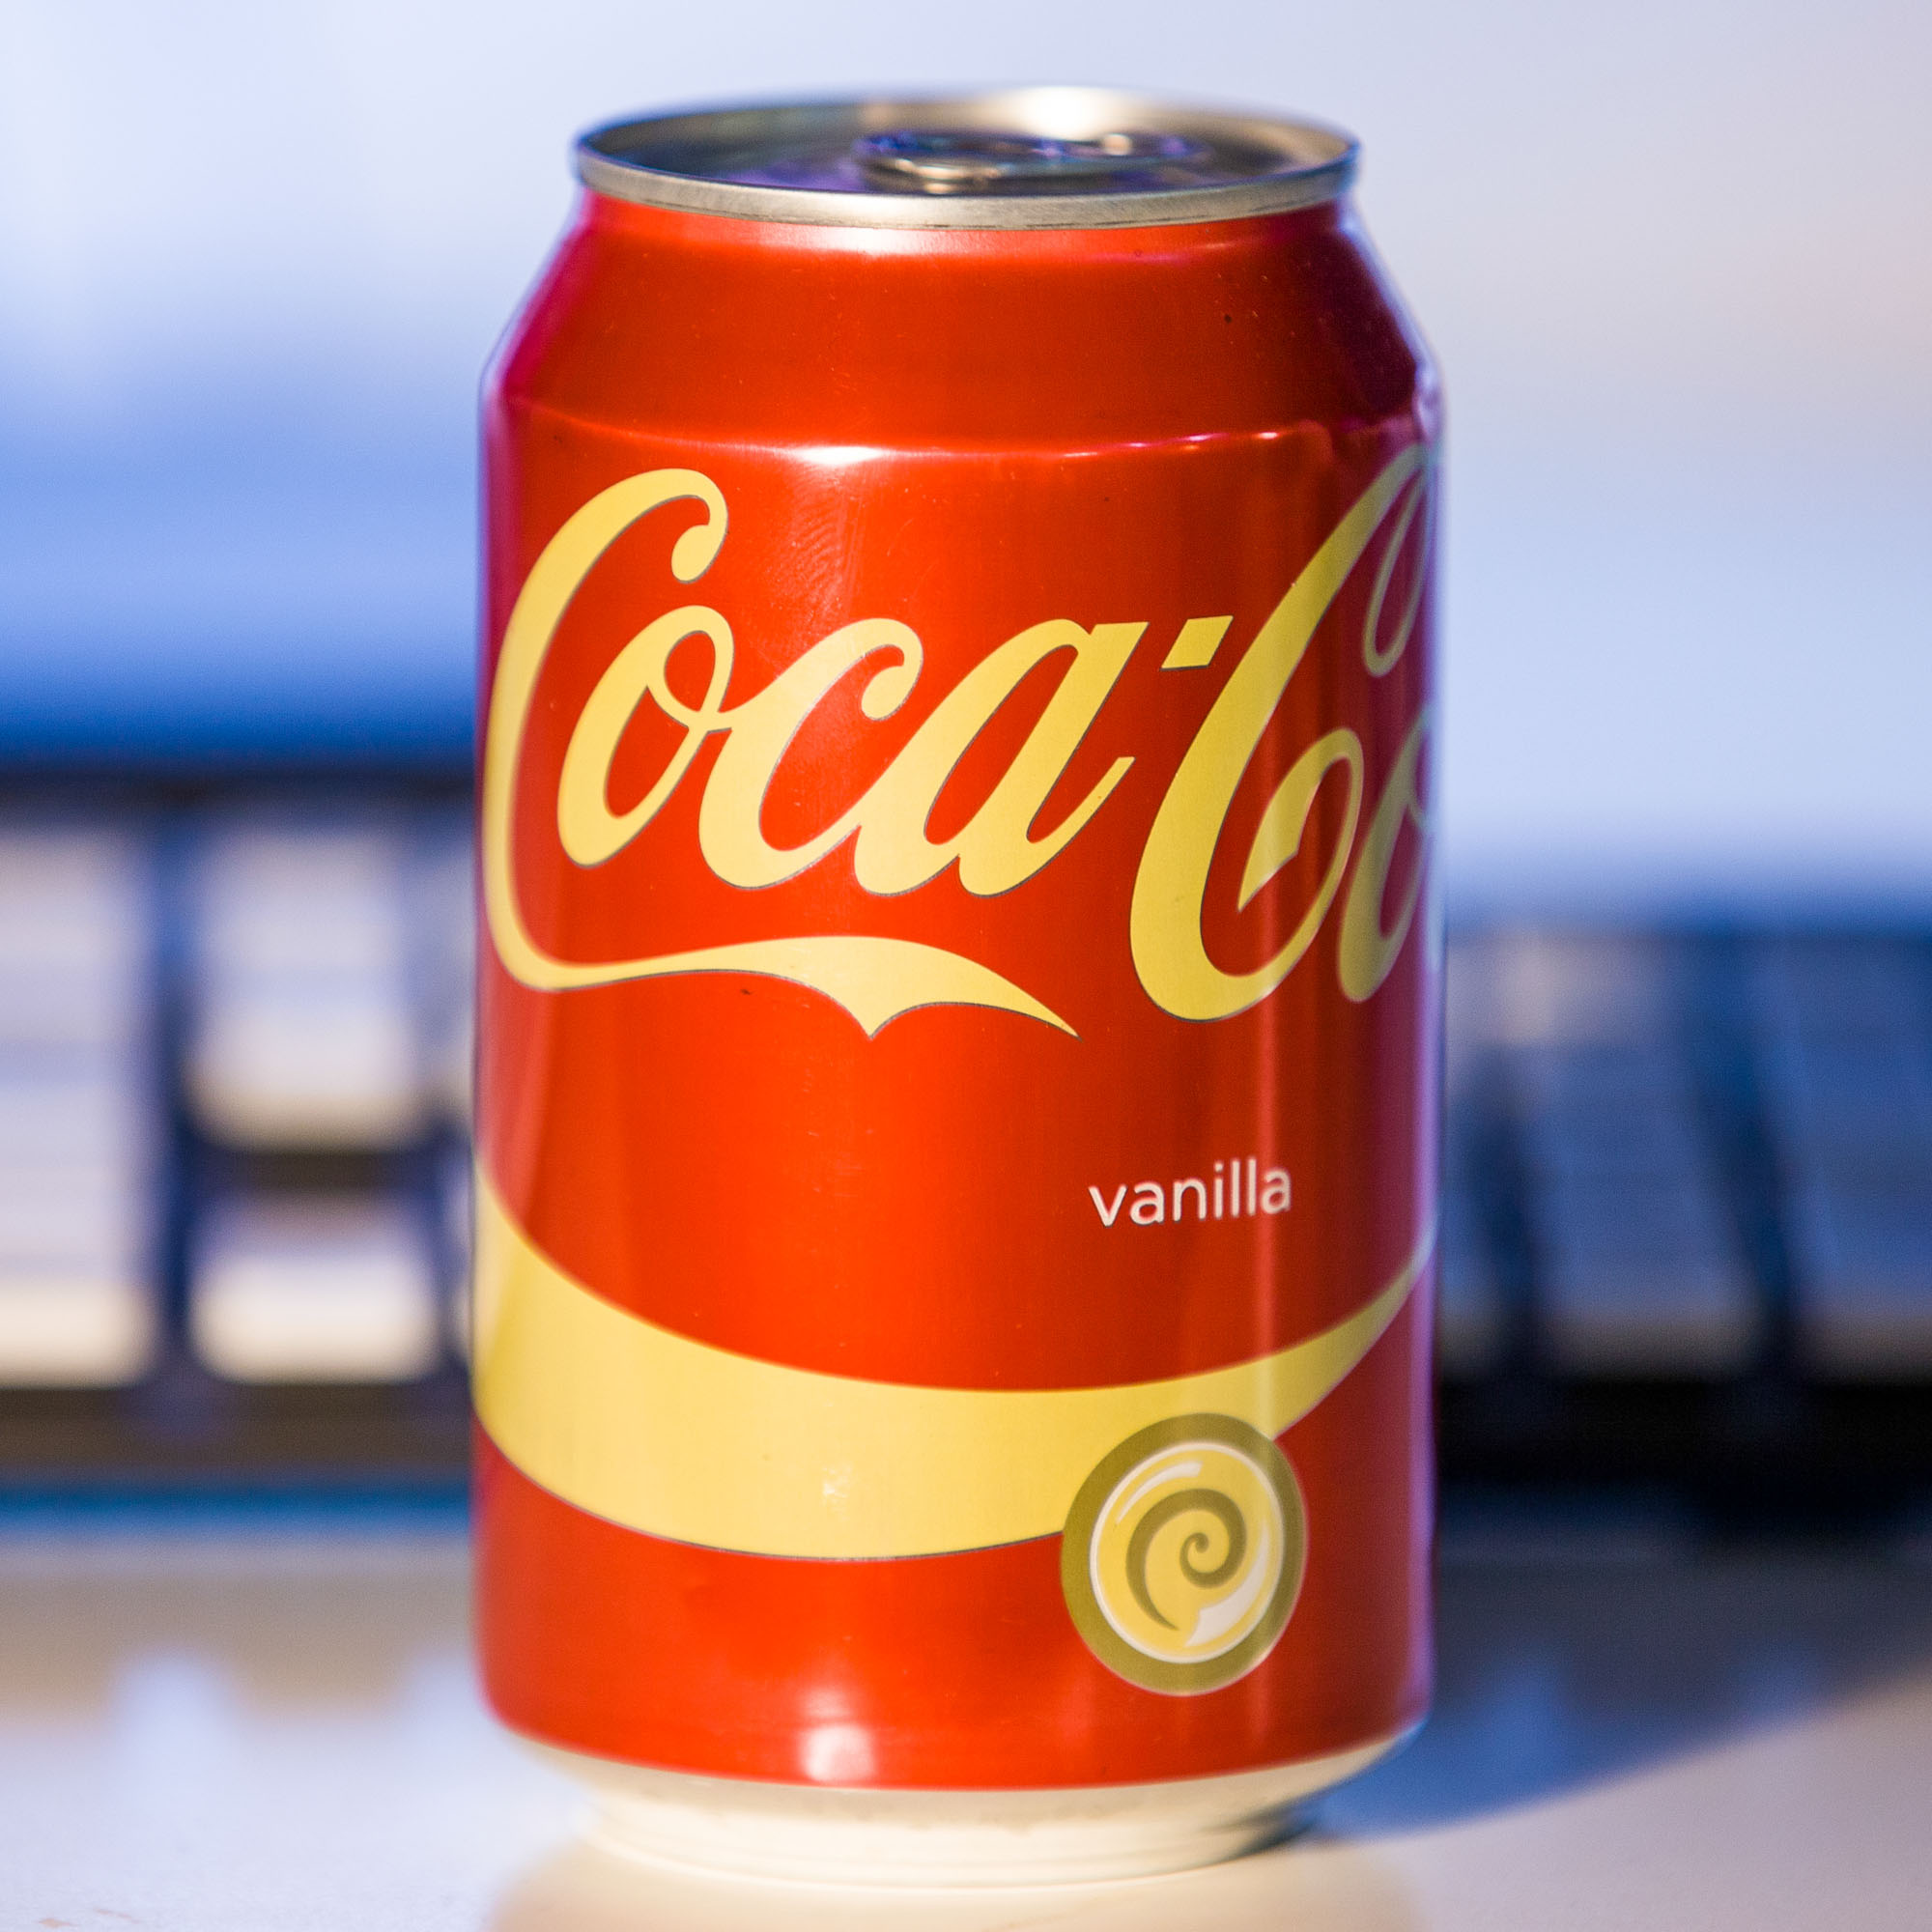 coca-cola-vanilla-photo-by-alexander-grosse-strangmann